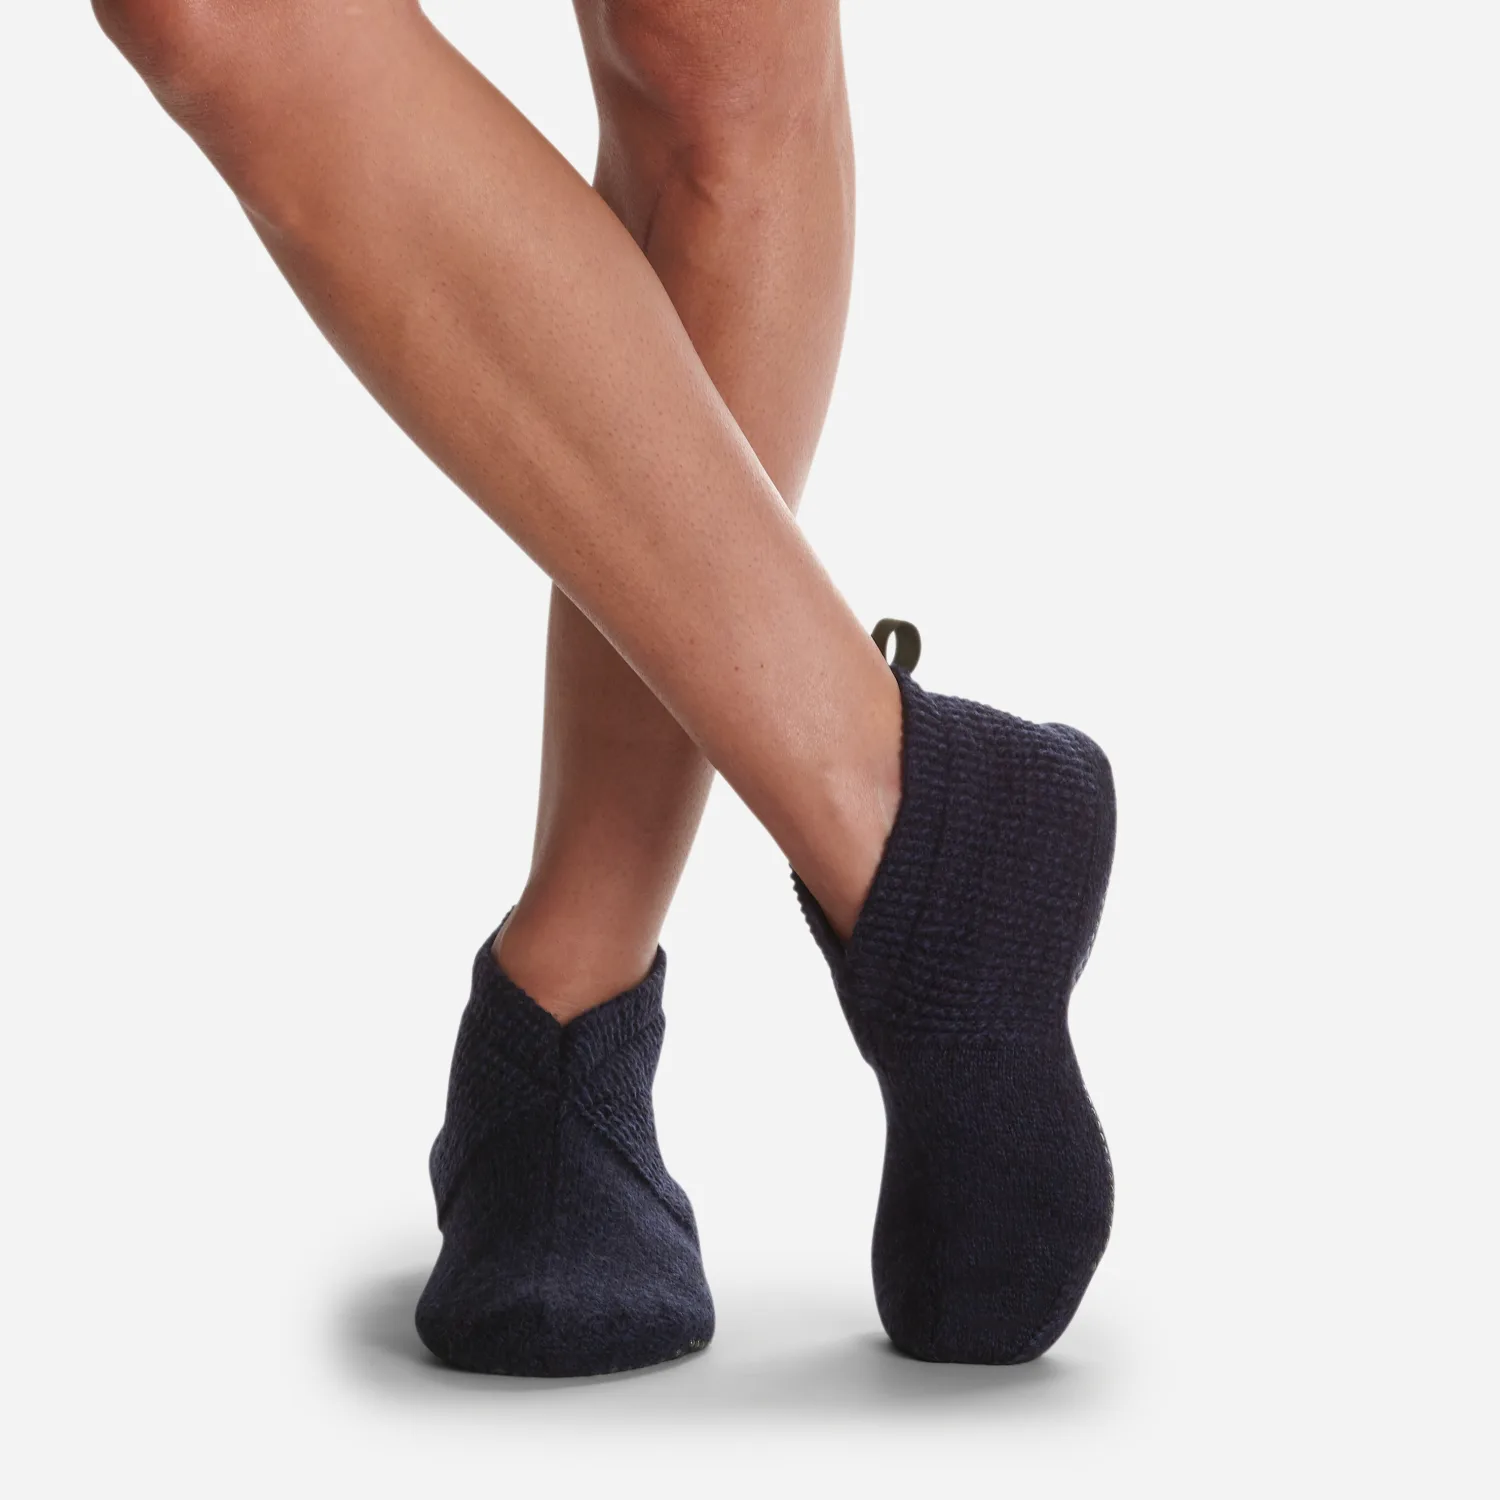 Bombas + Fair Isle Grip Sock Slippers